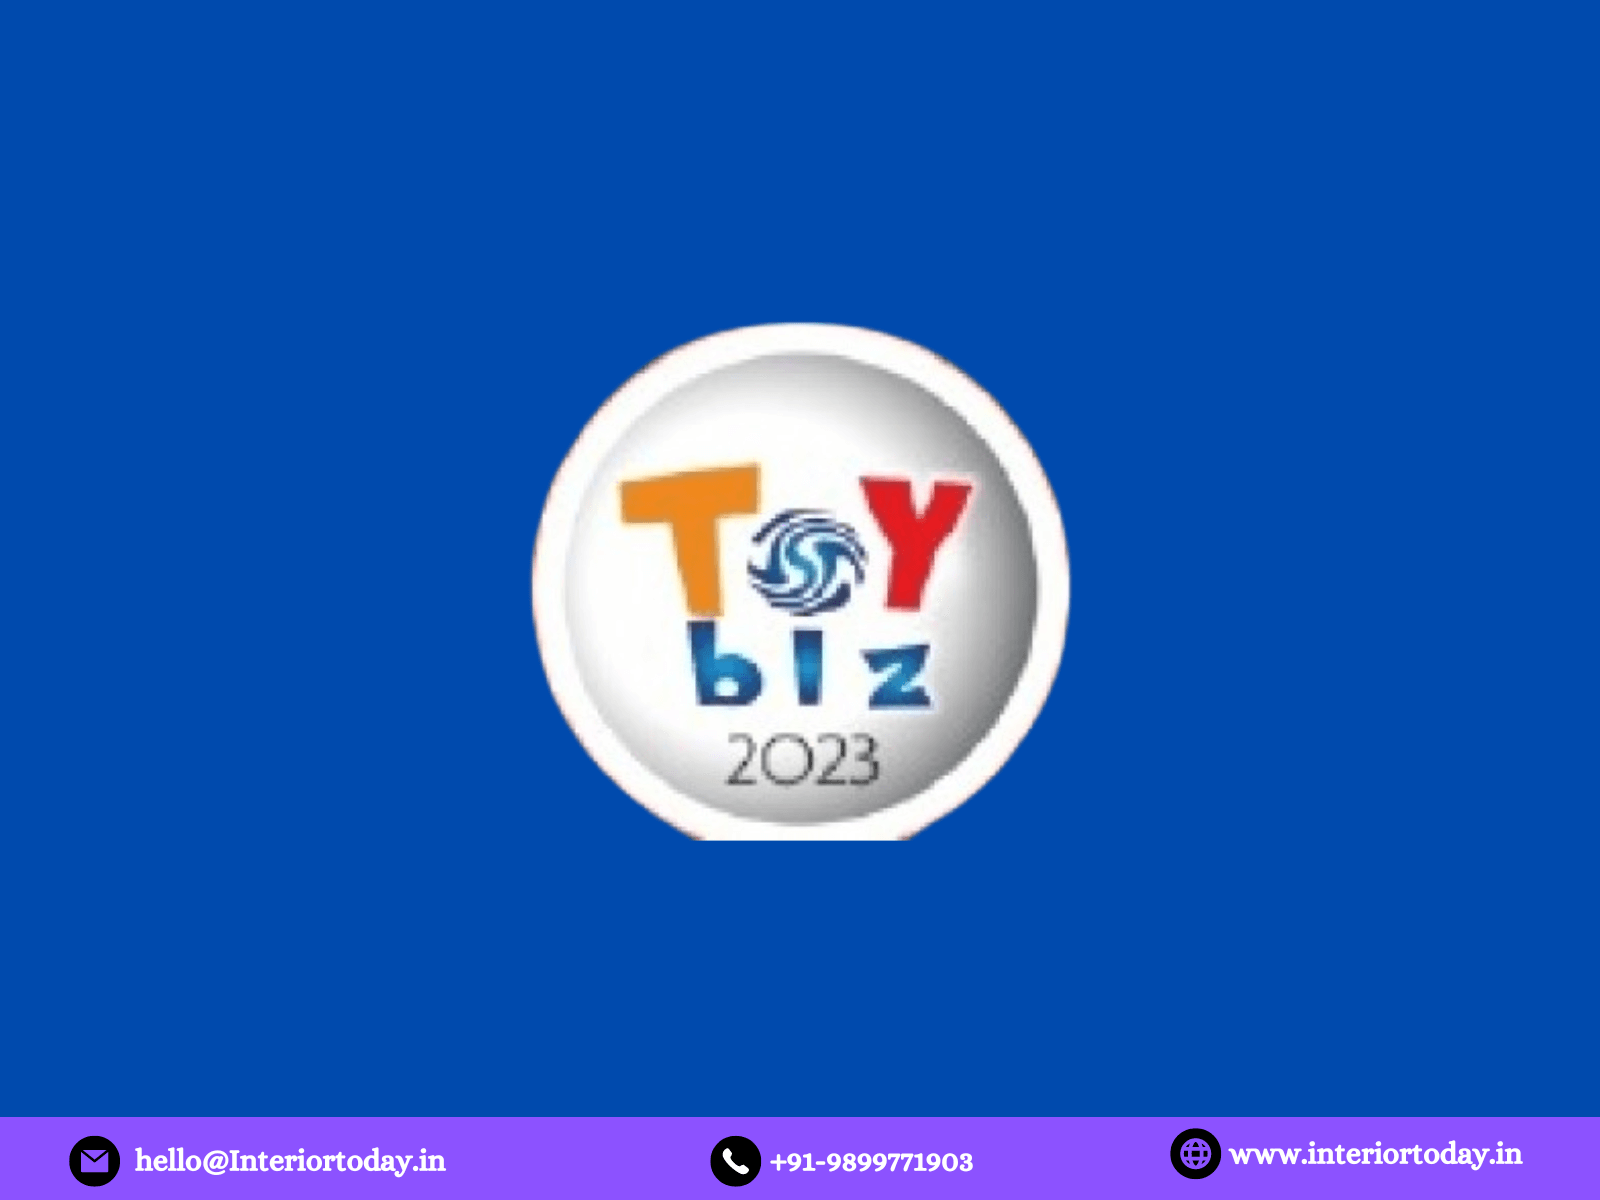 TOY-BIZ-2023-INTERNATIONAL-INTERIOR-TODAY